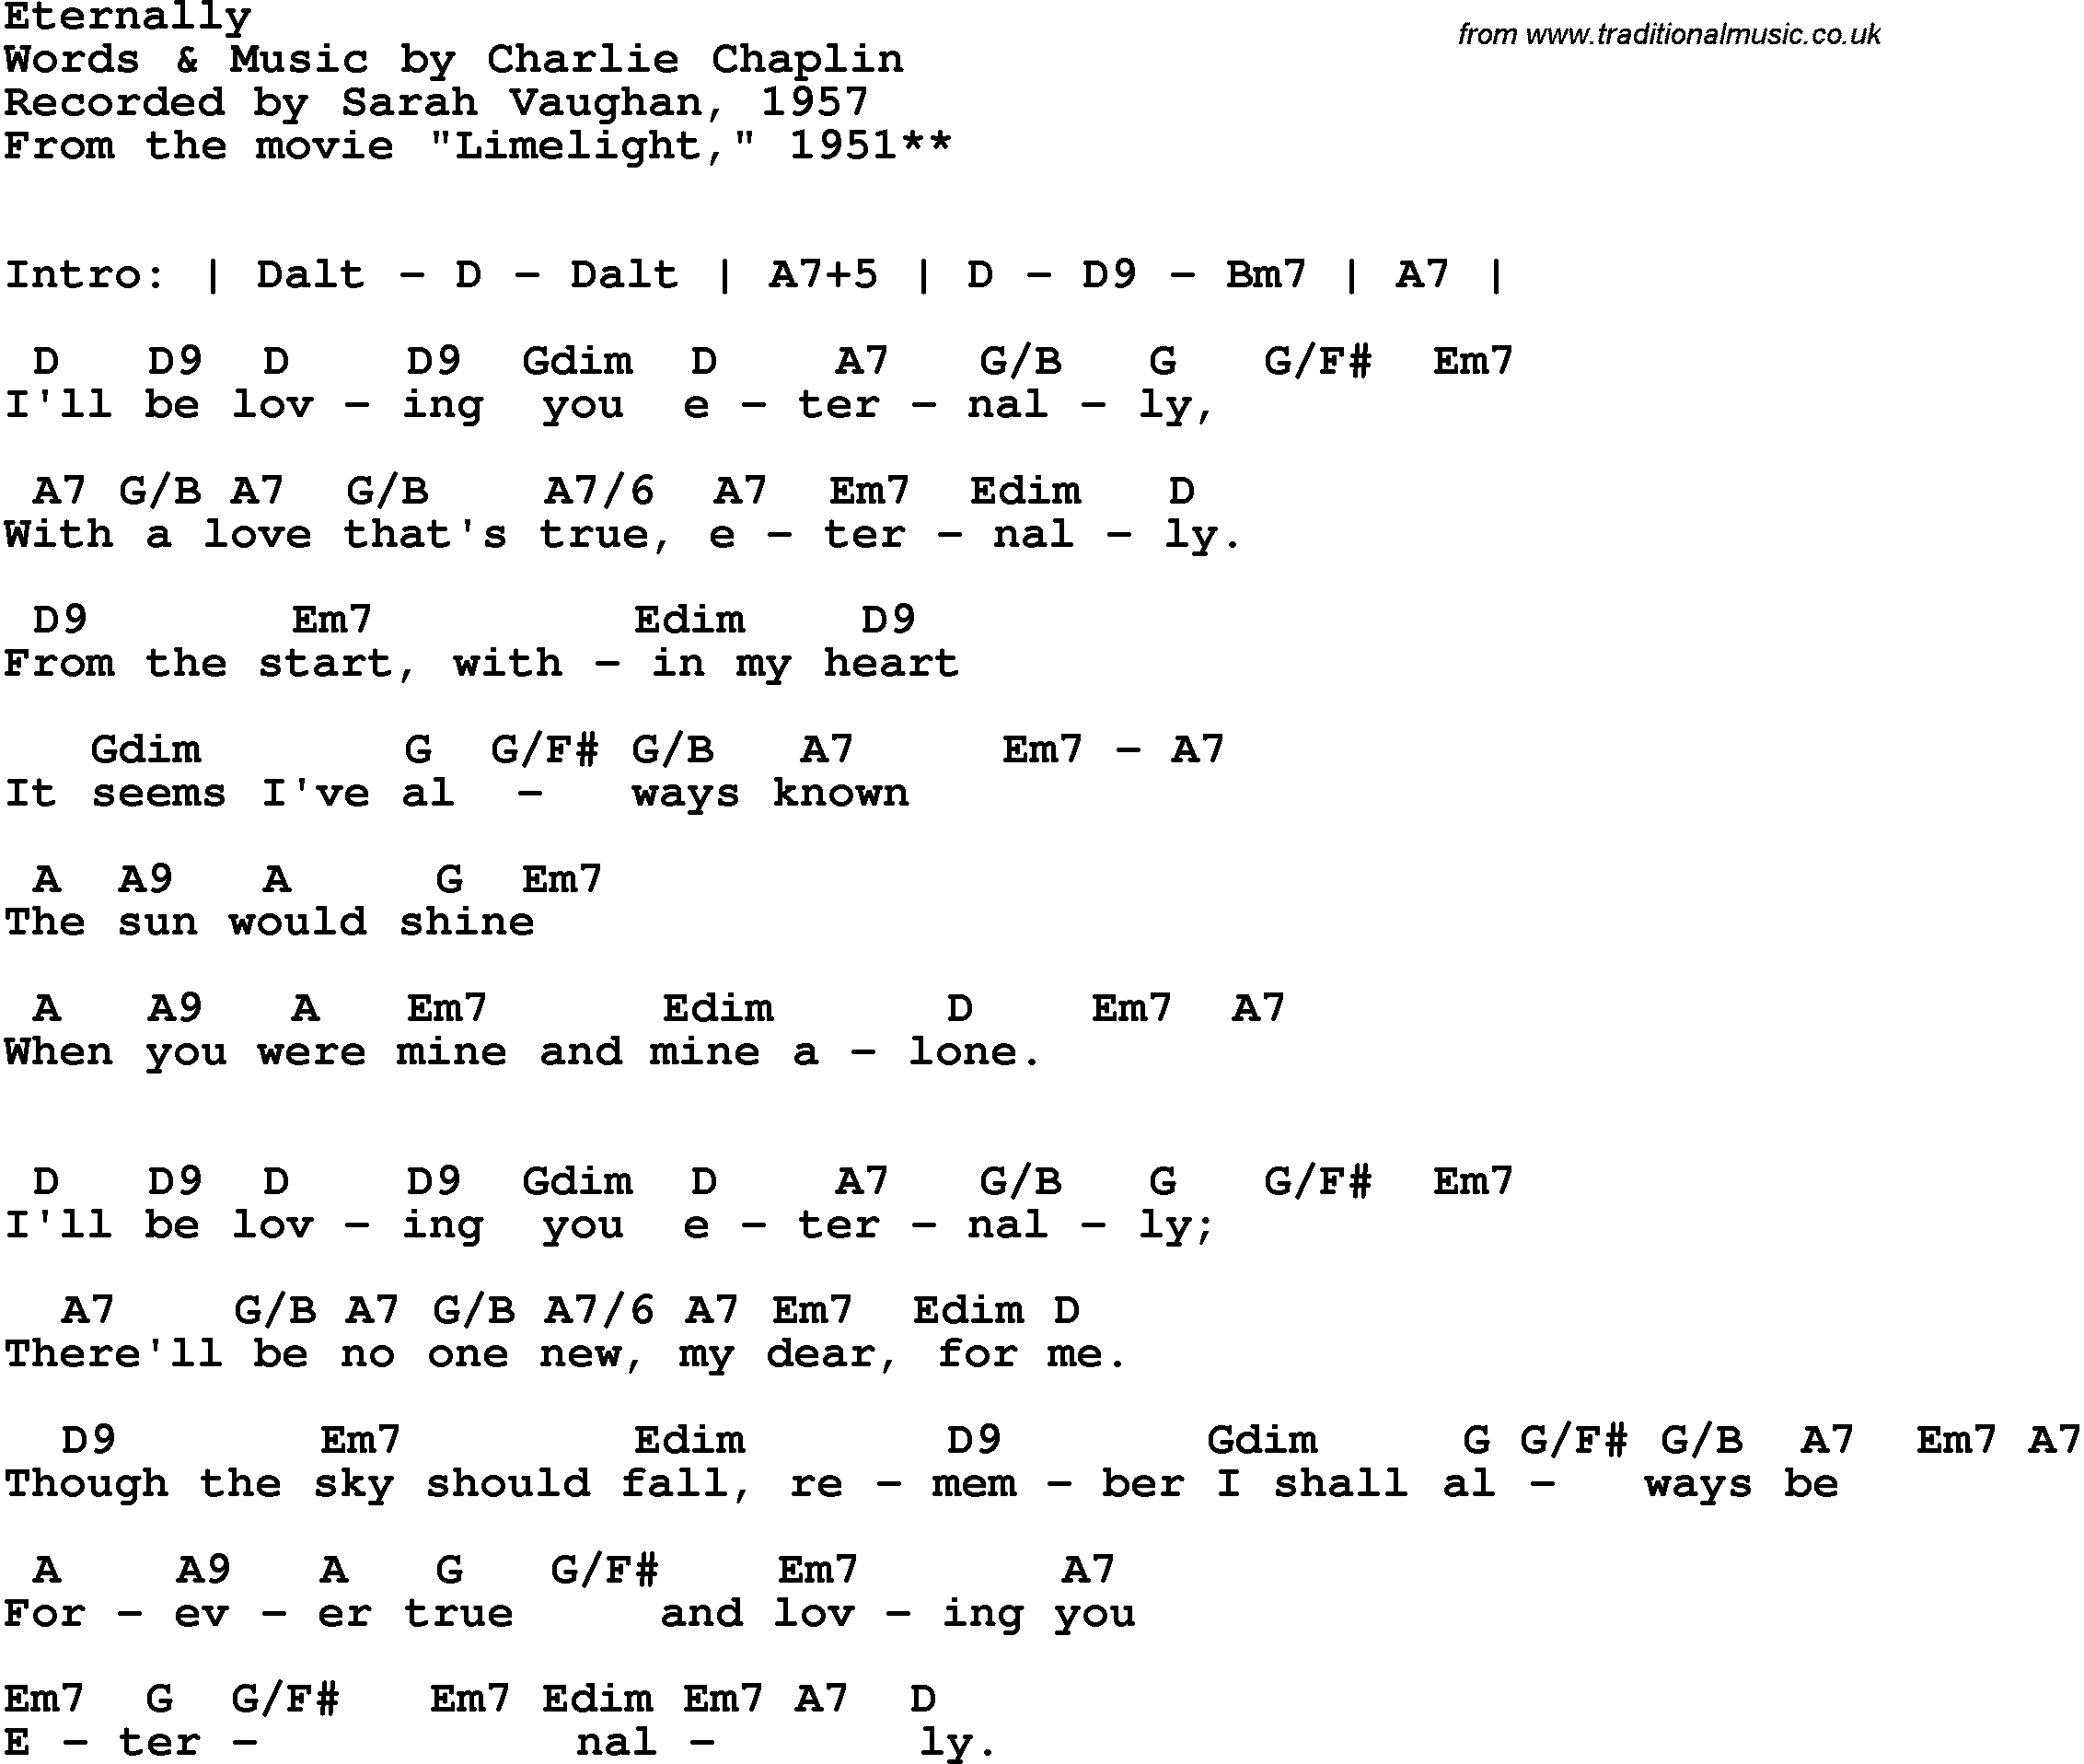 Song Lyrics with guitar chords for Eternally - Sarah Vaughan, 1957